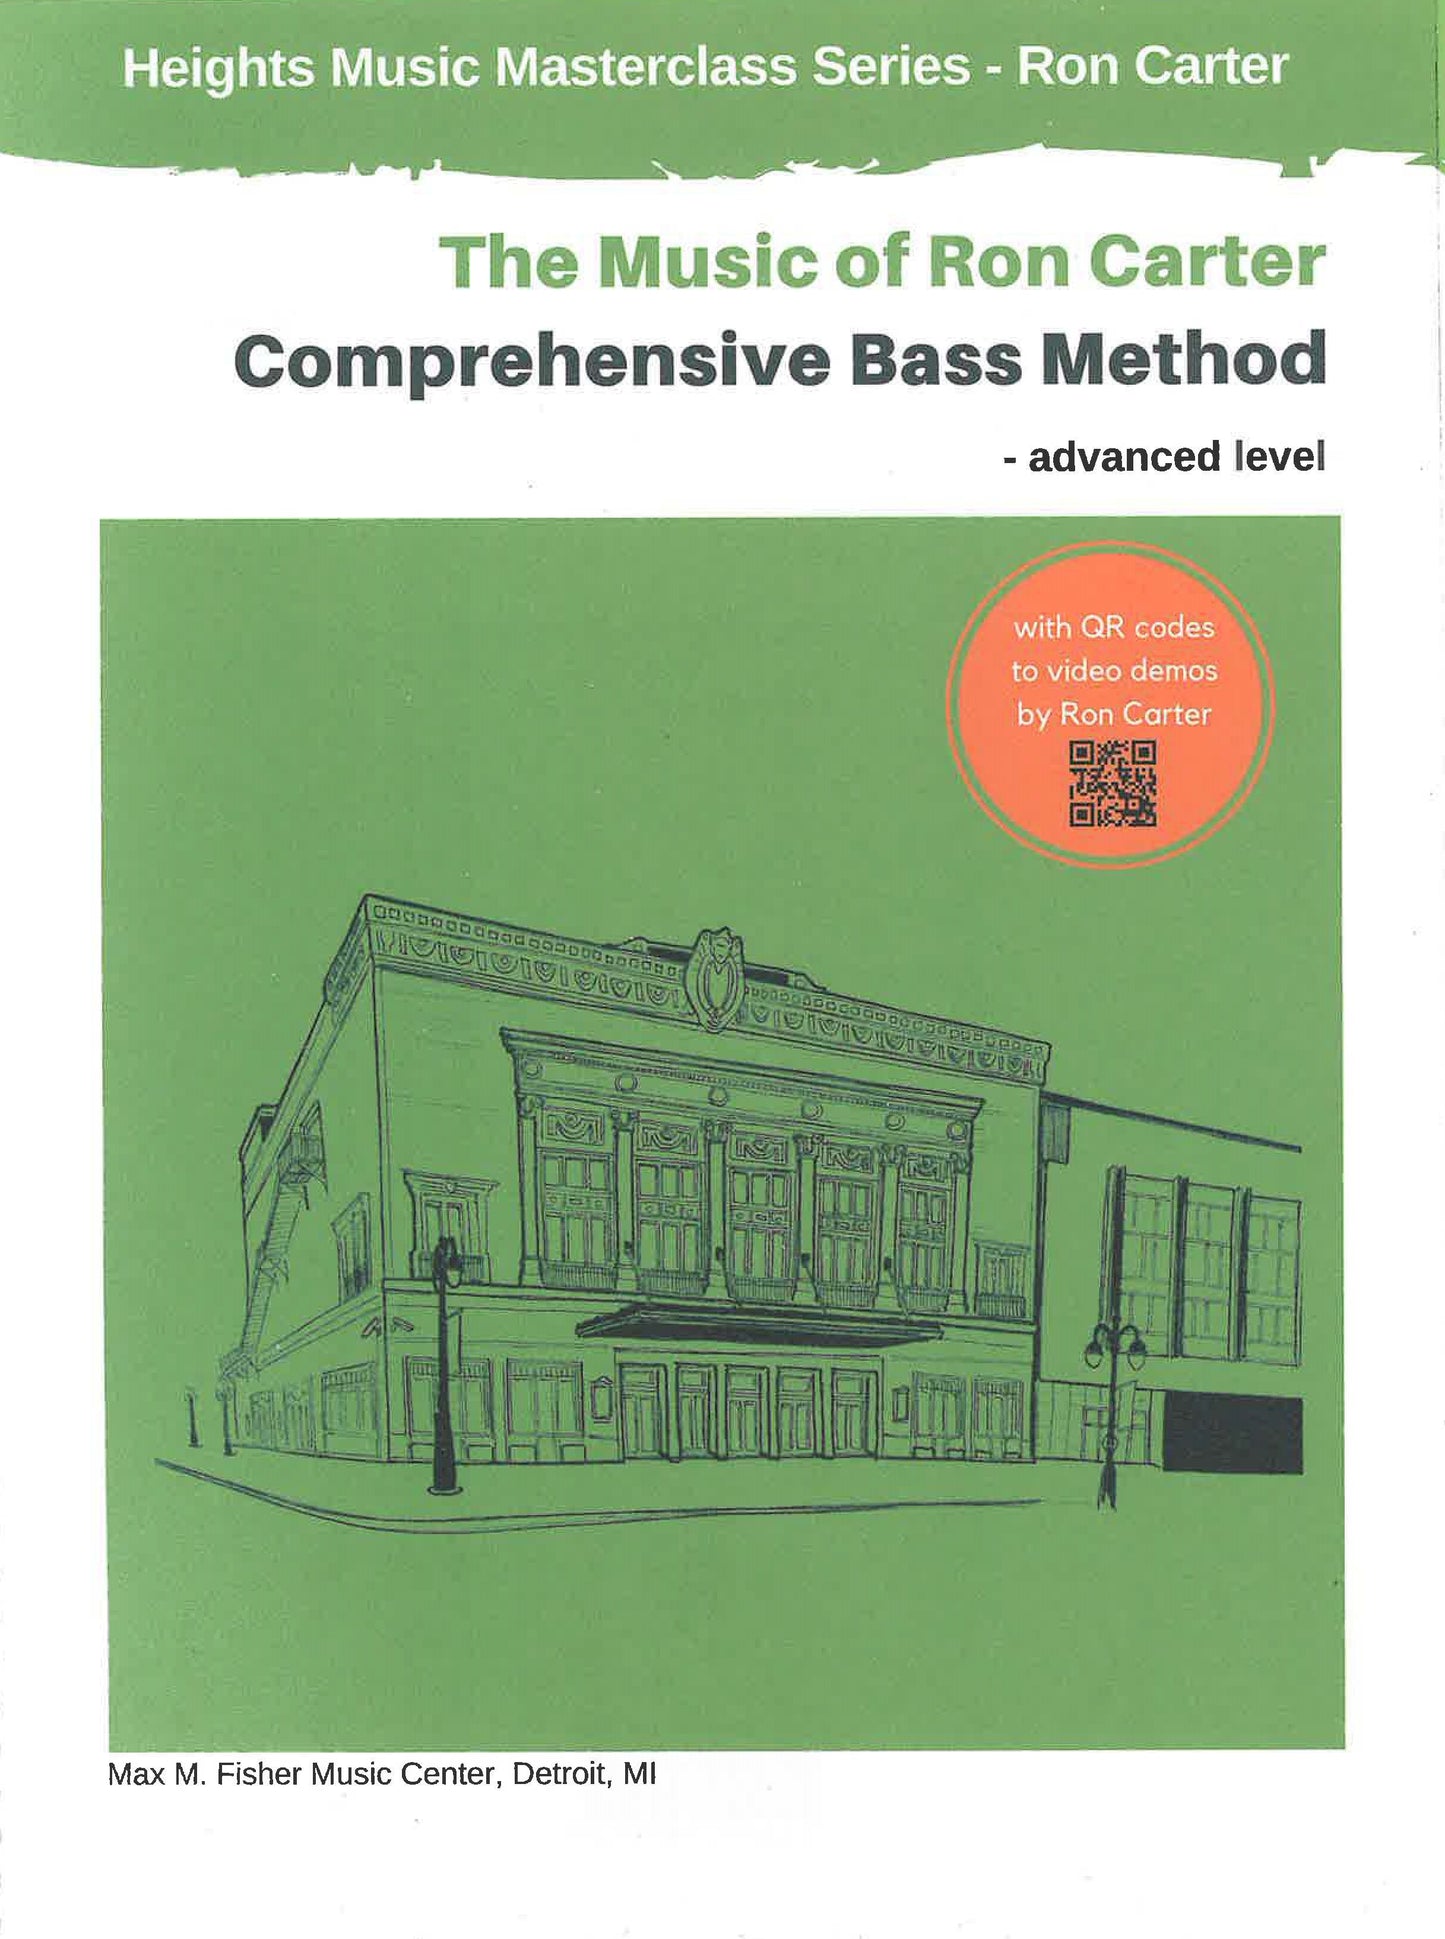 Carter: Comprehensive Bass Methods - Advanced Level